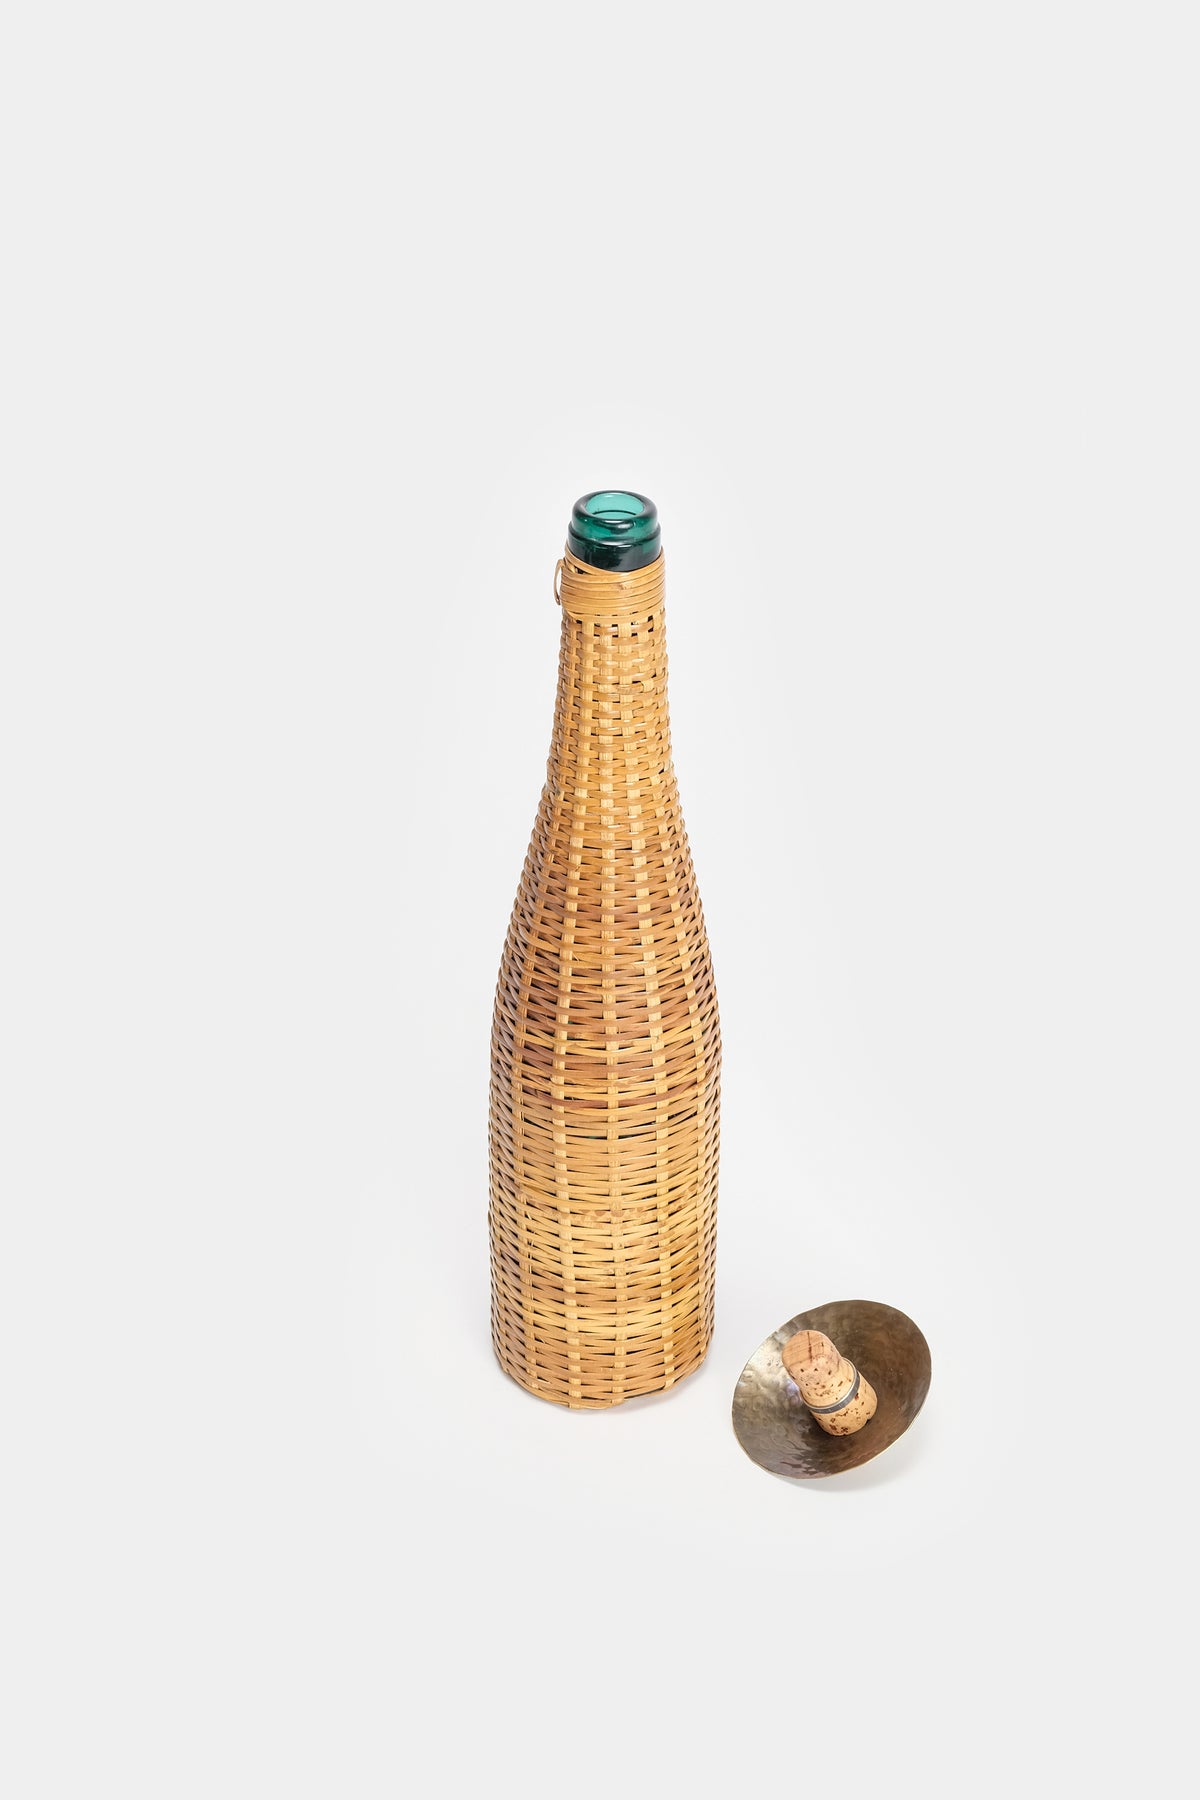 Weave-covered bottle, France, 50s